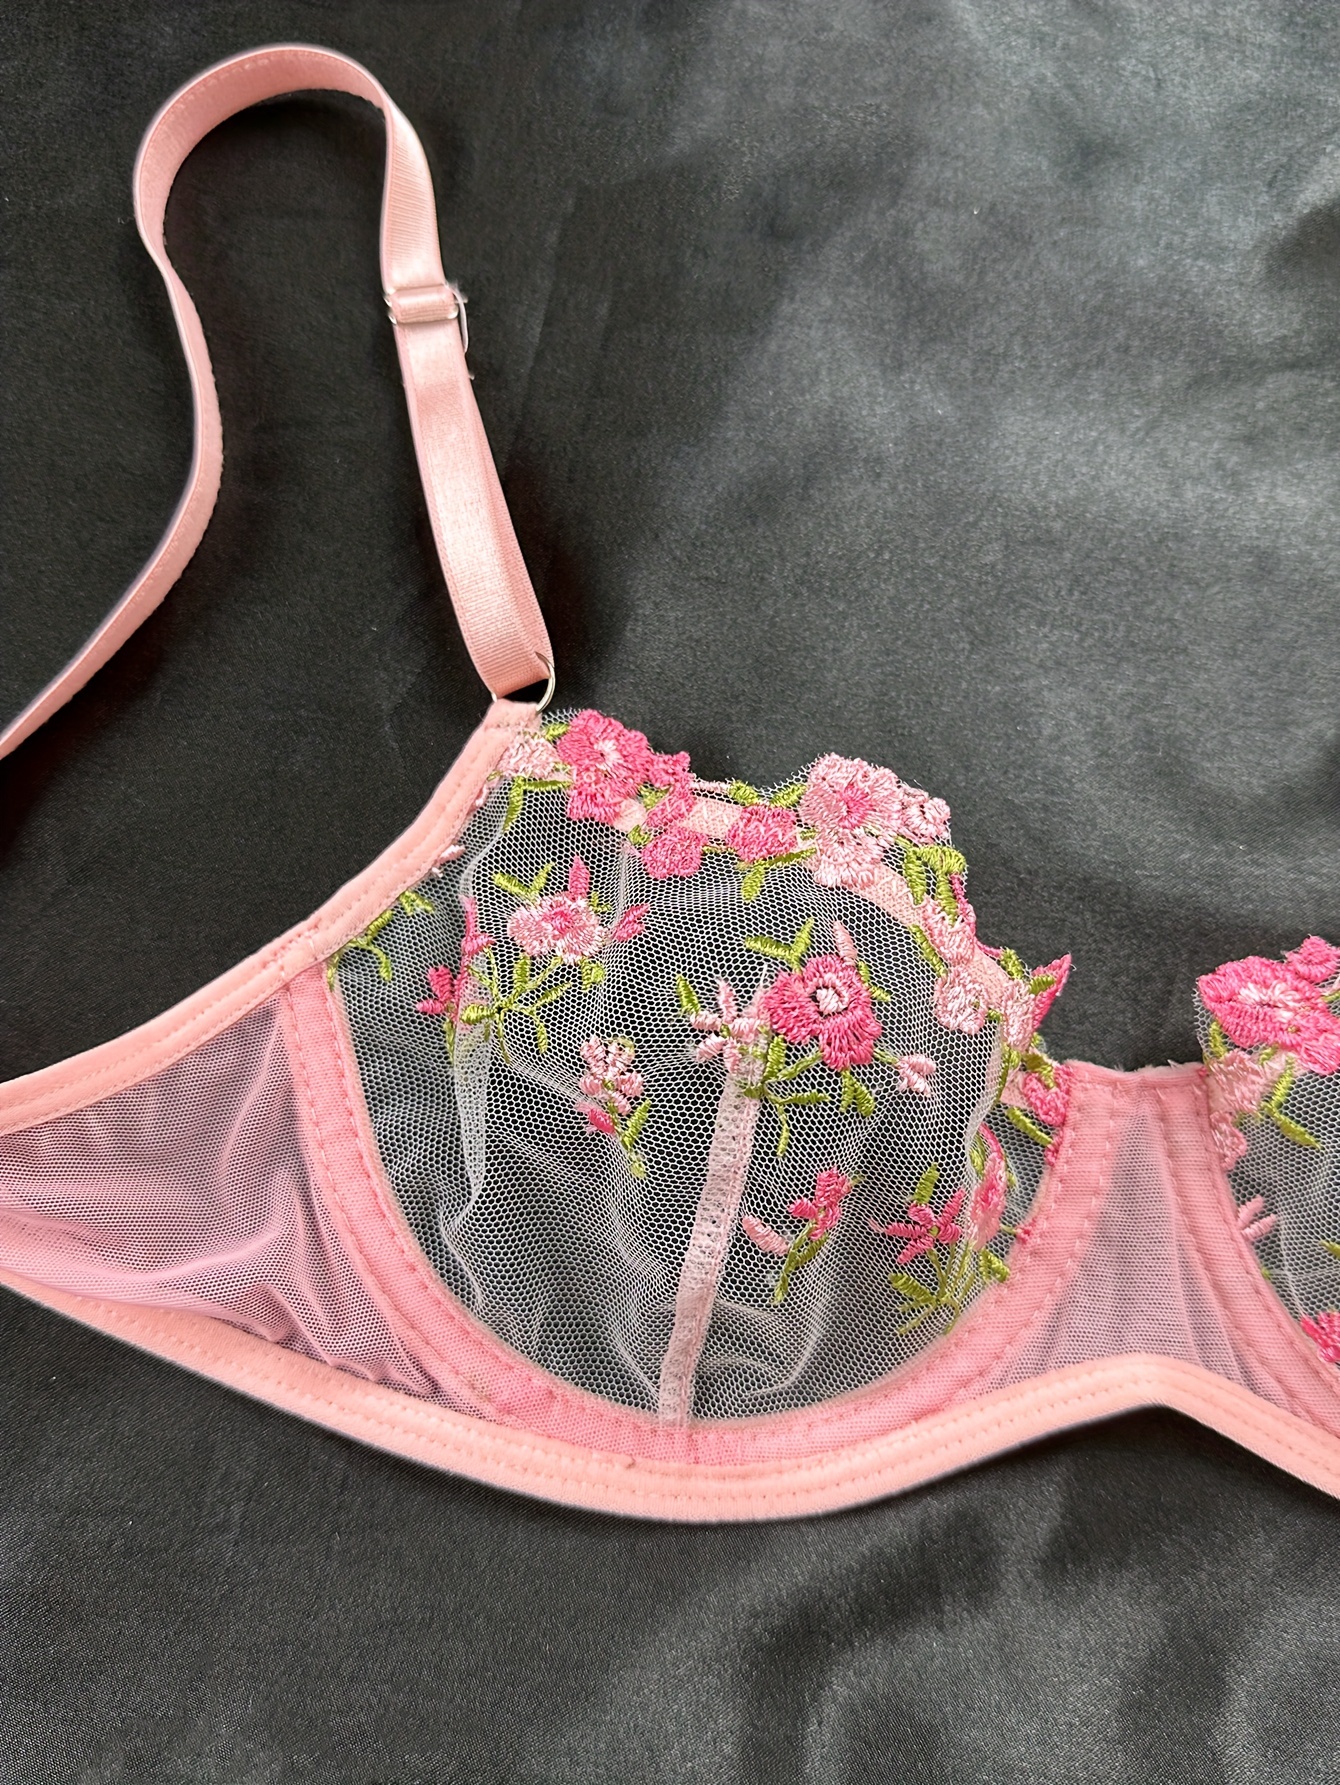 unlined bra top from victoria's secret  Bra tops, Unlined bra, Victoria  secret bustier